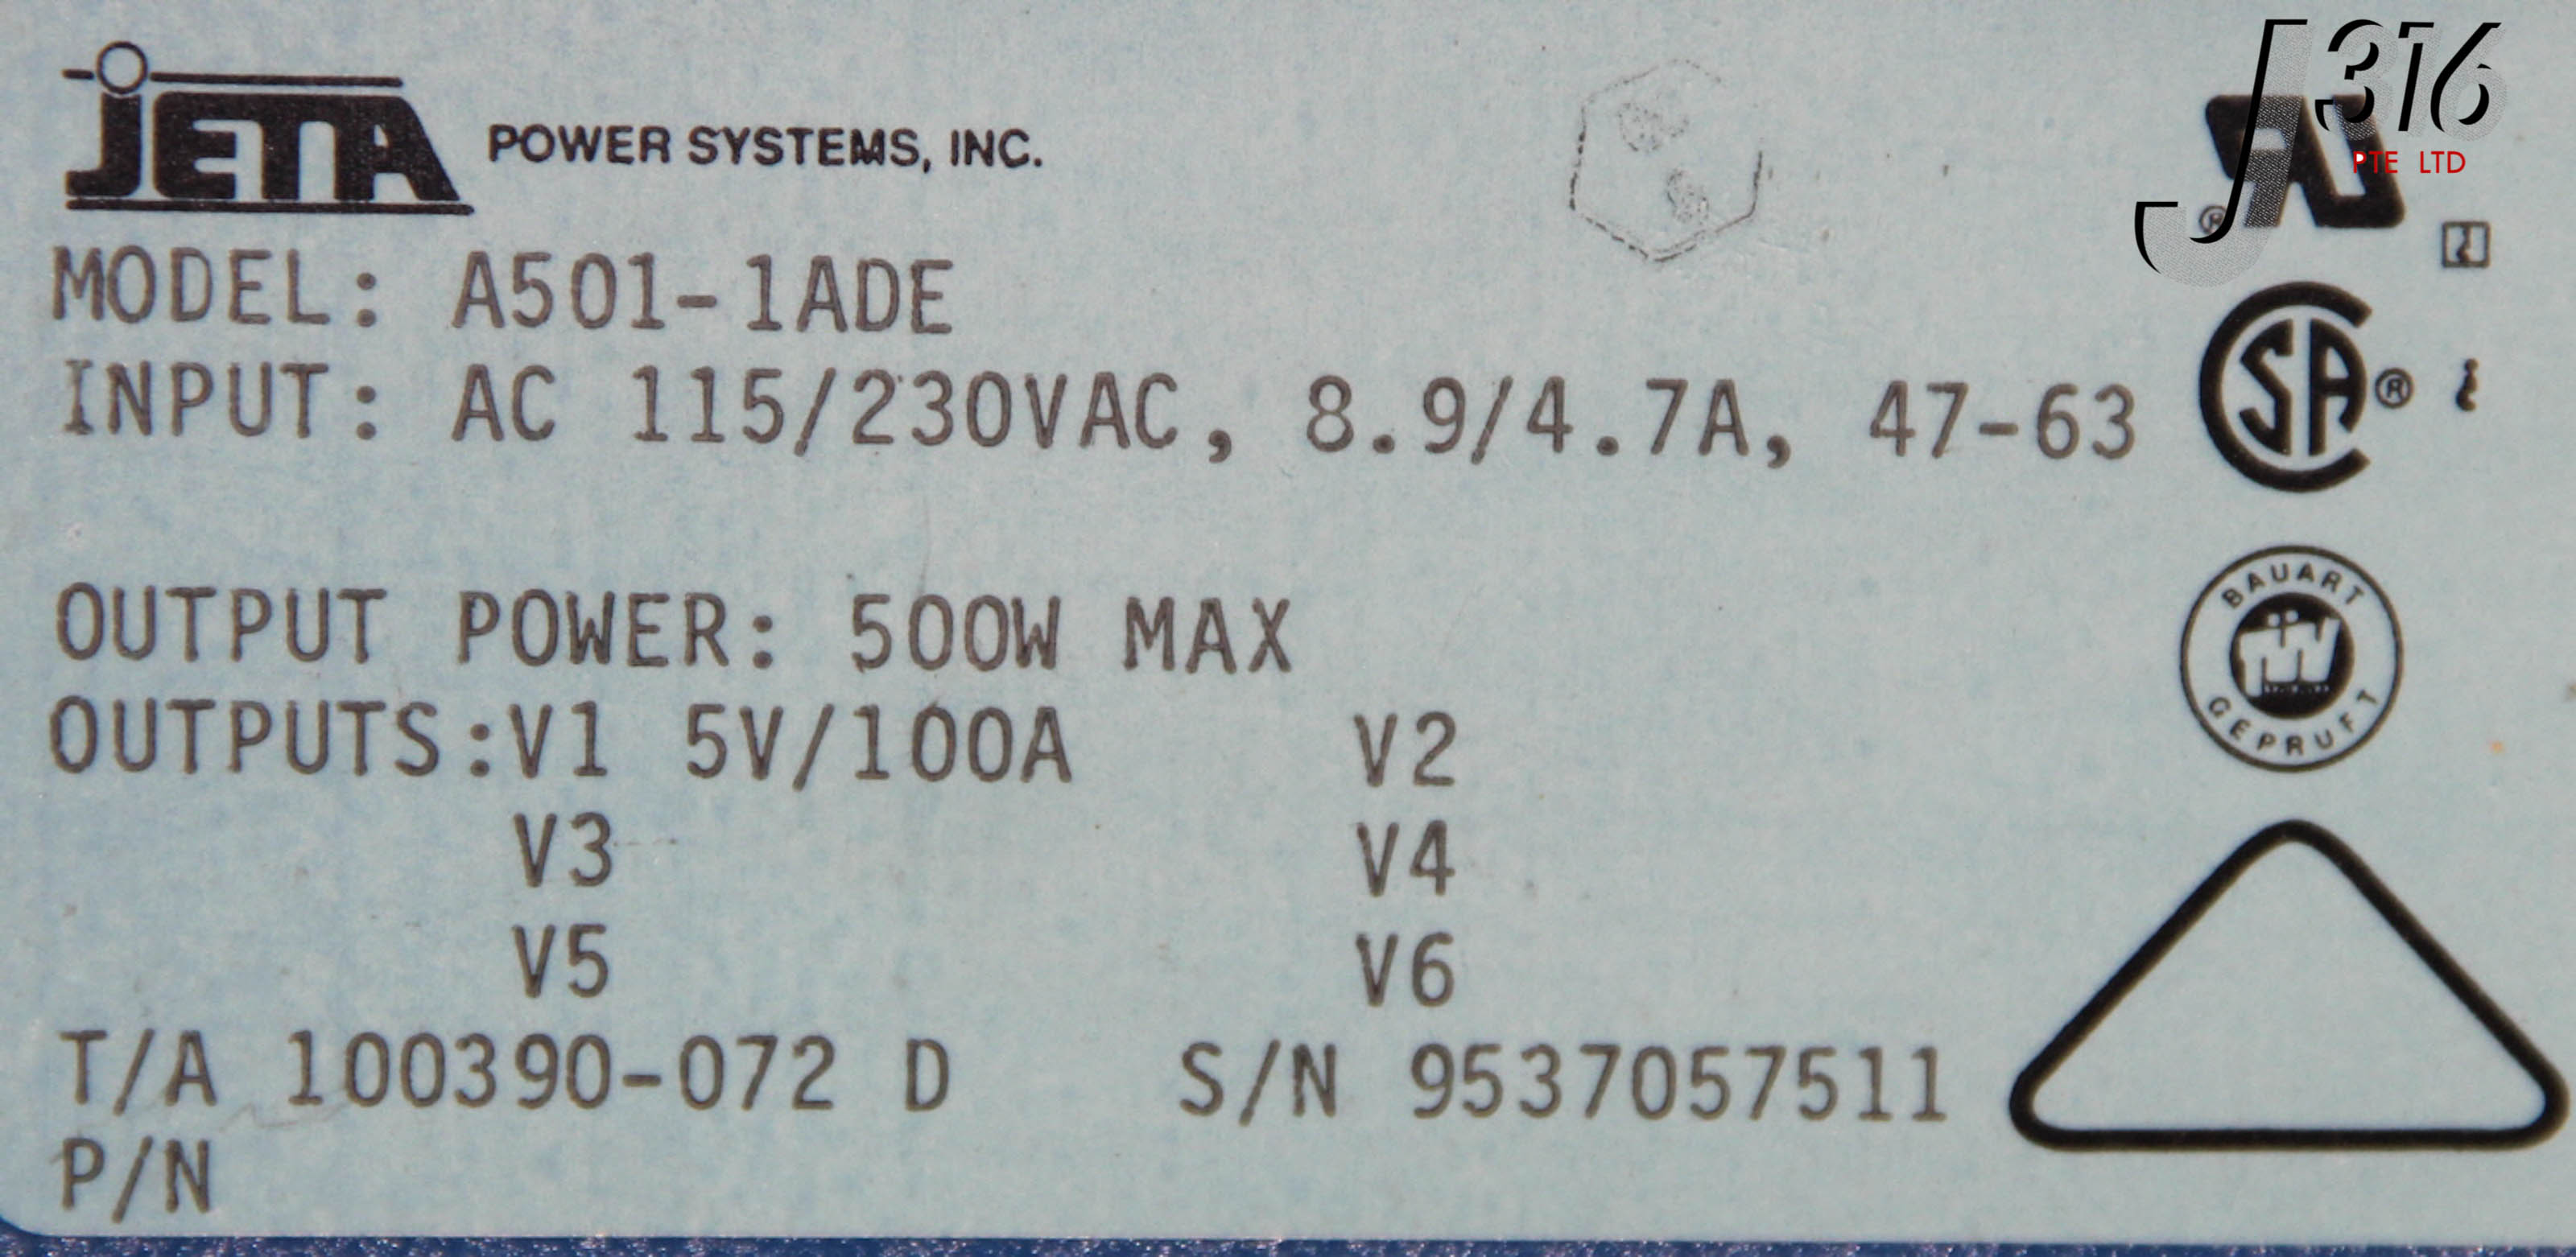 7192 JETA POWER SYSTEMS POWER SUPPLY, AC 115/230VAC, 8.9/4.7A...